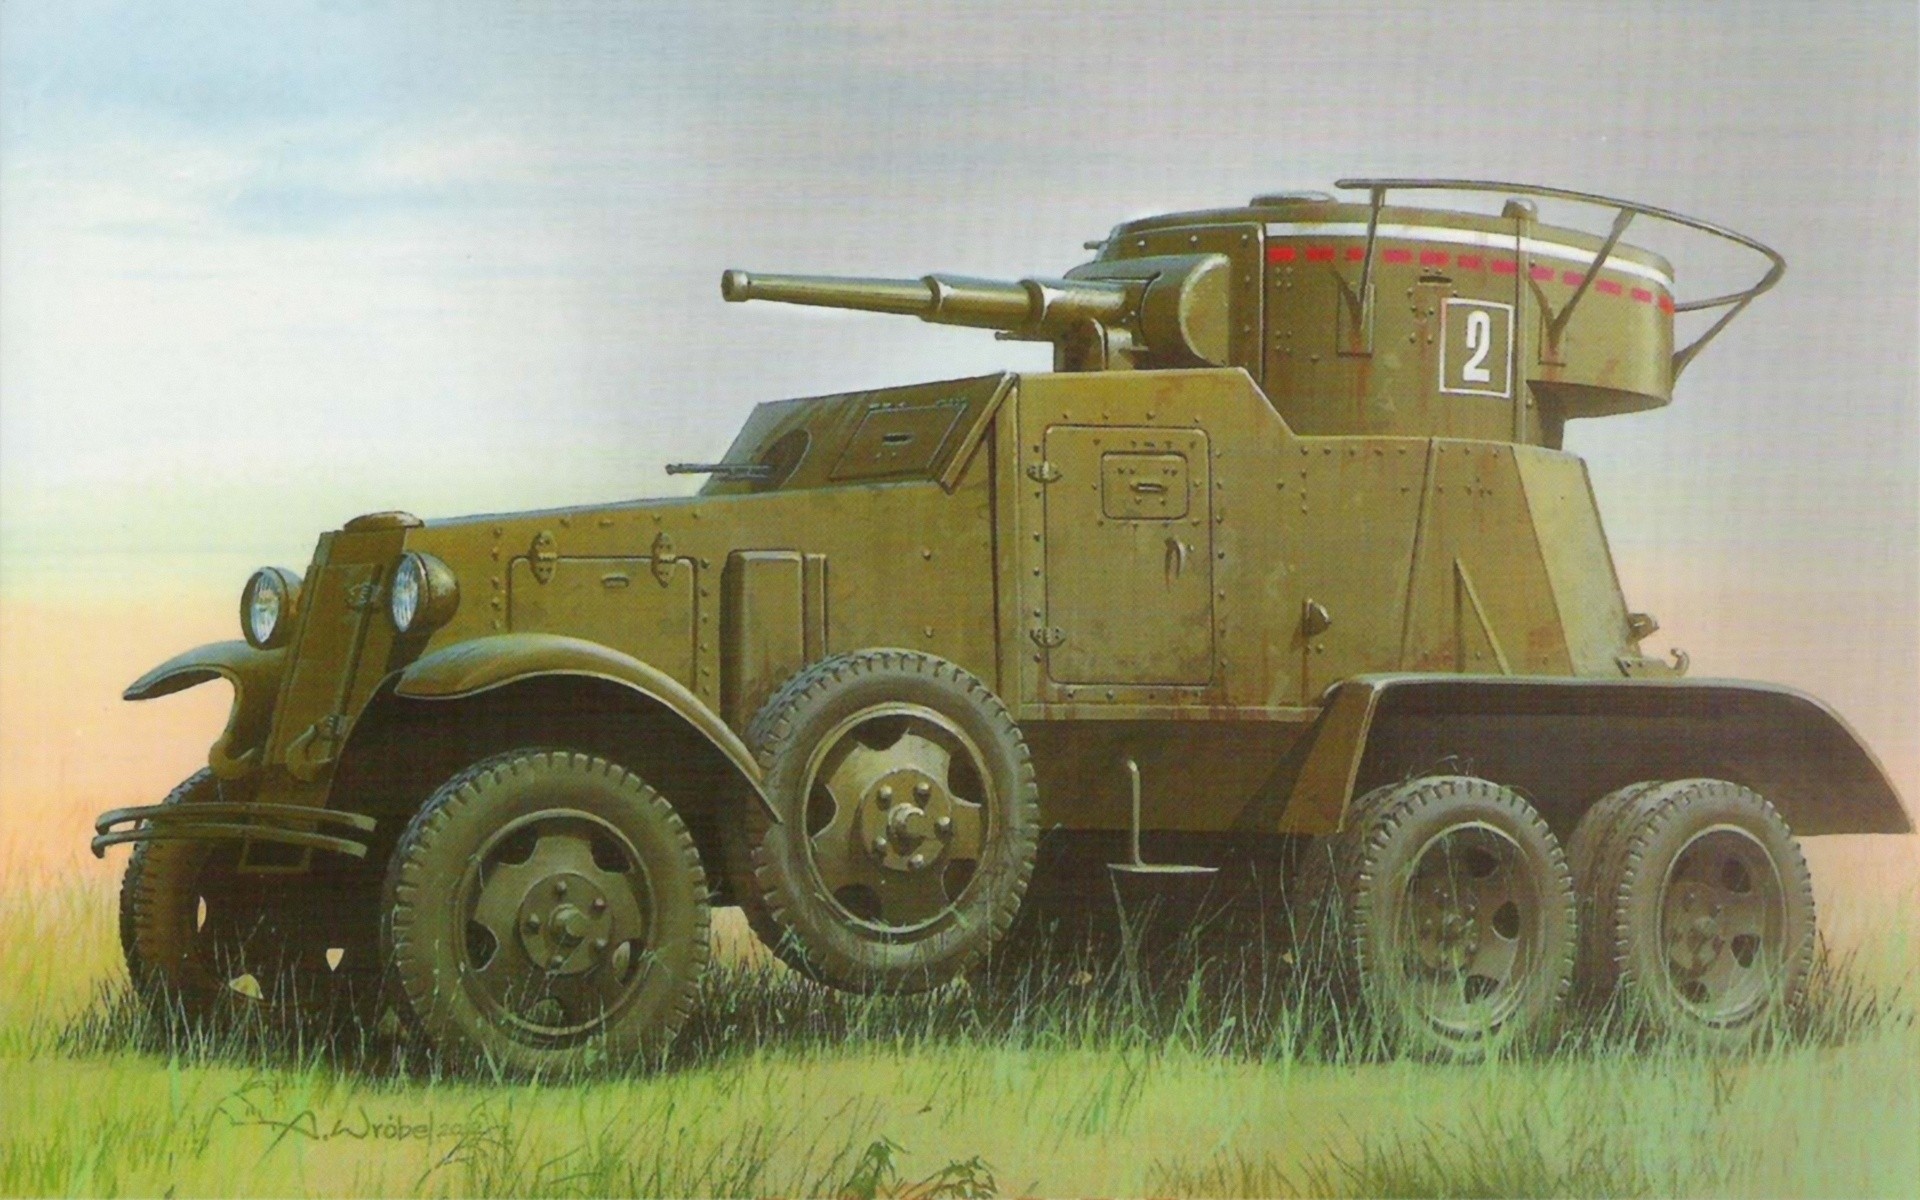 Ба х. Ба-10 бронеавтомобиль. Ба-10 бронеавтомобиль арт. Ба-3 бронеавтомобиль. Бронеавтомобили РККА 1941.